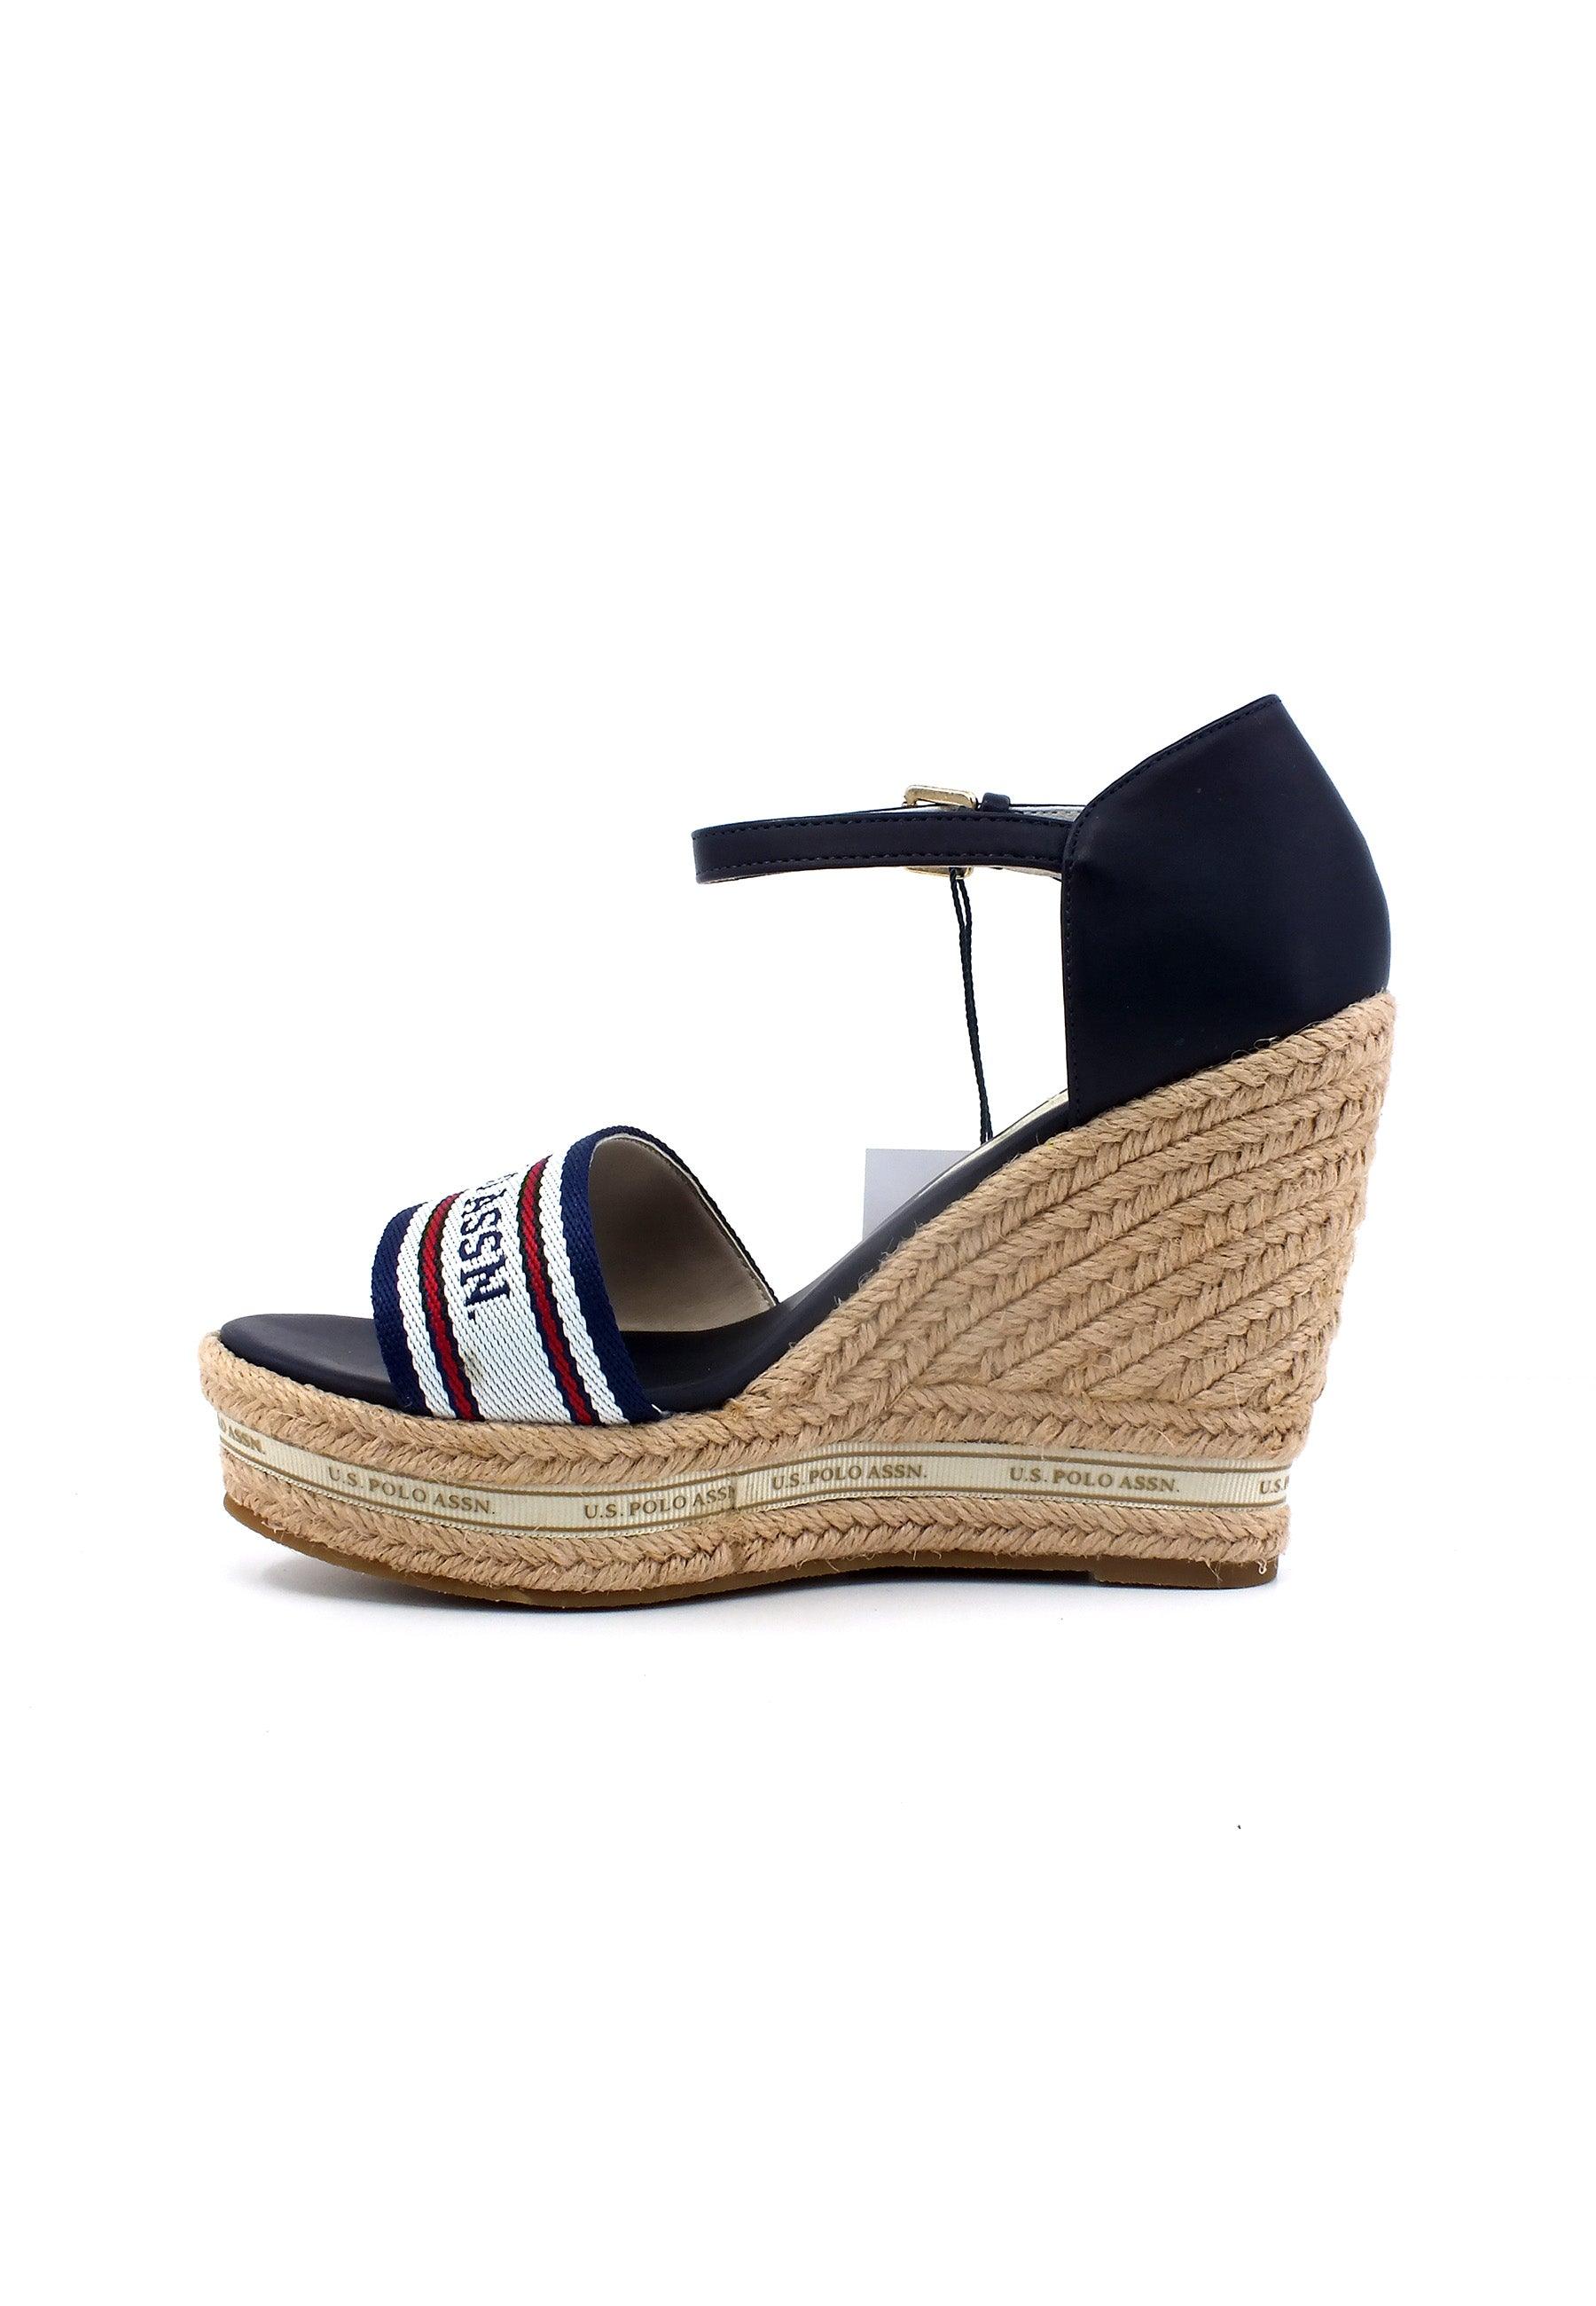 U.S. POLO ASSN. Sandalo Zeppa Donna Blu AYLIN009 - Sandrini Calzature e Abbigliamento